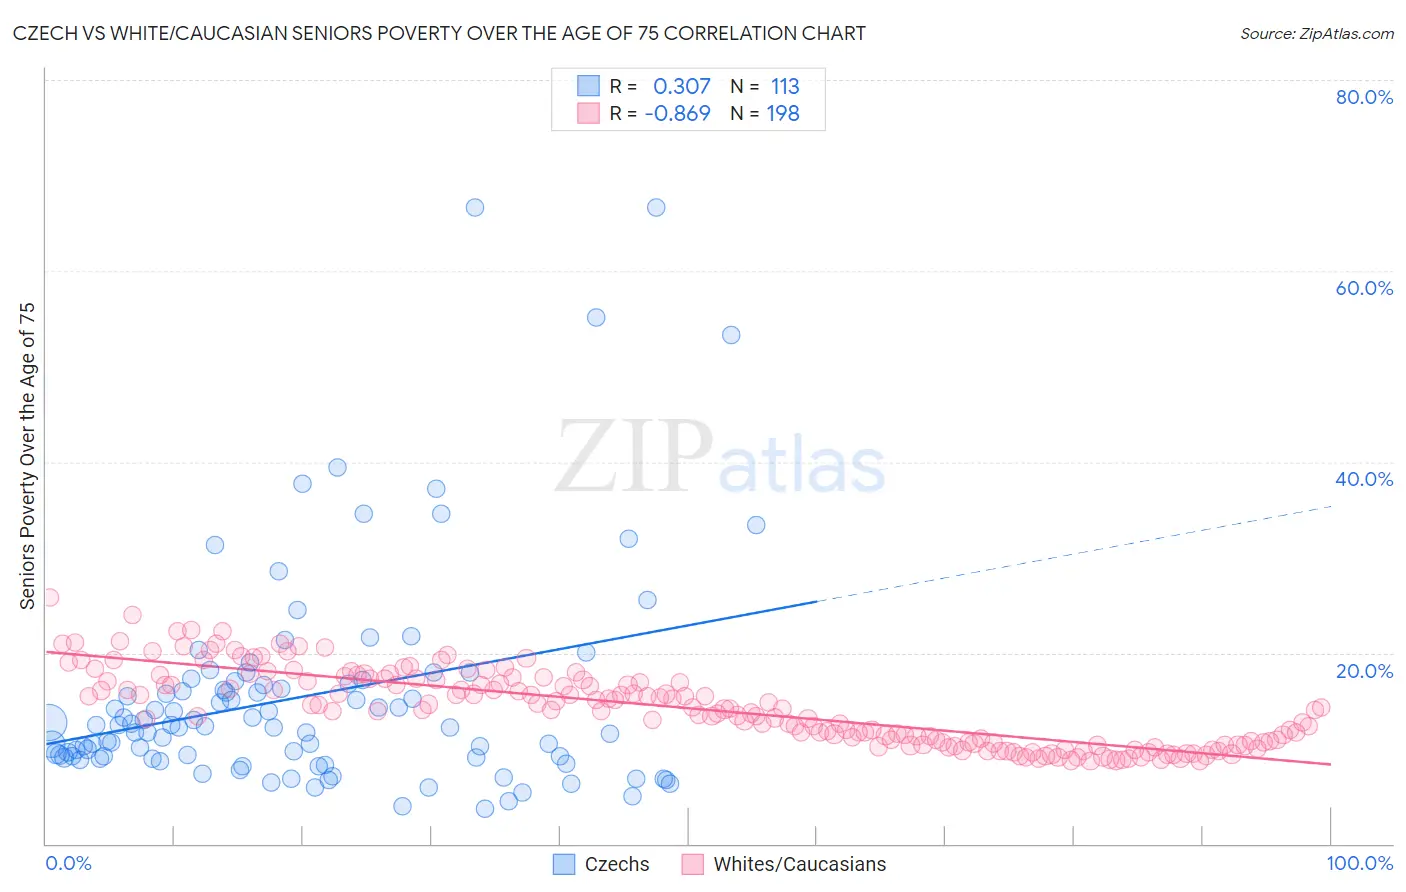 Czech vs White/Caucasian Seniors Poverty Over the Age of 75